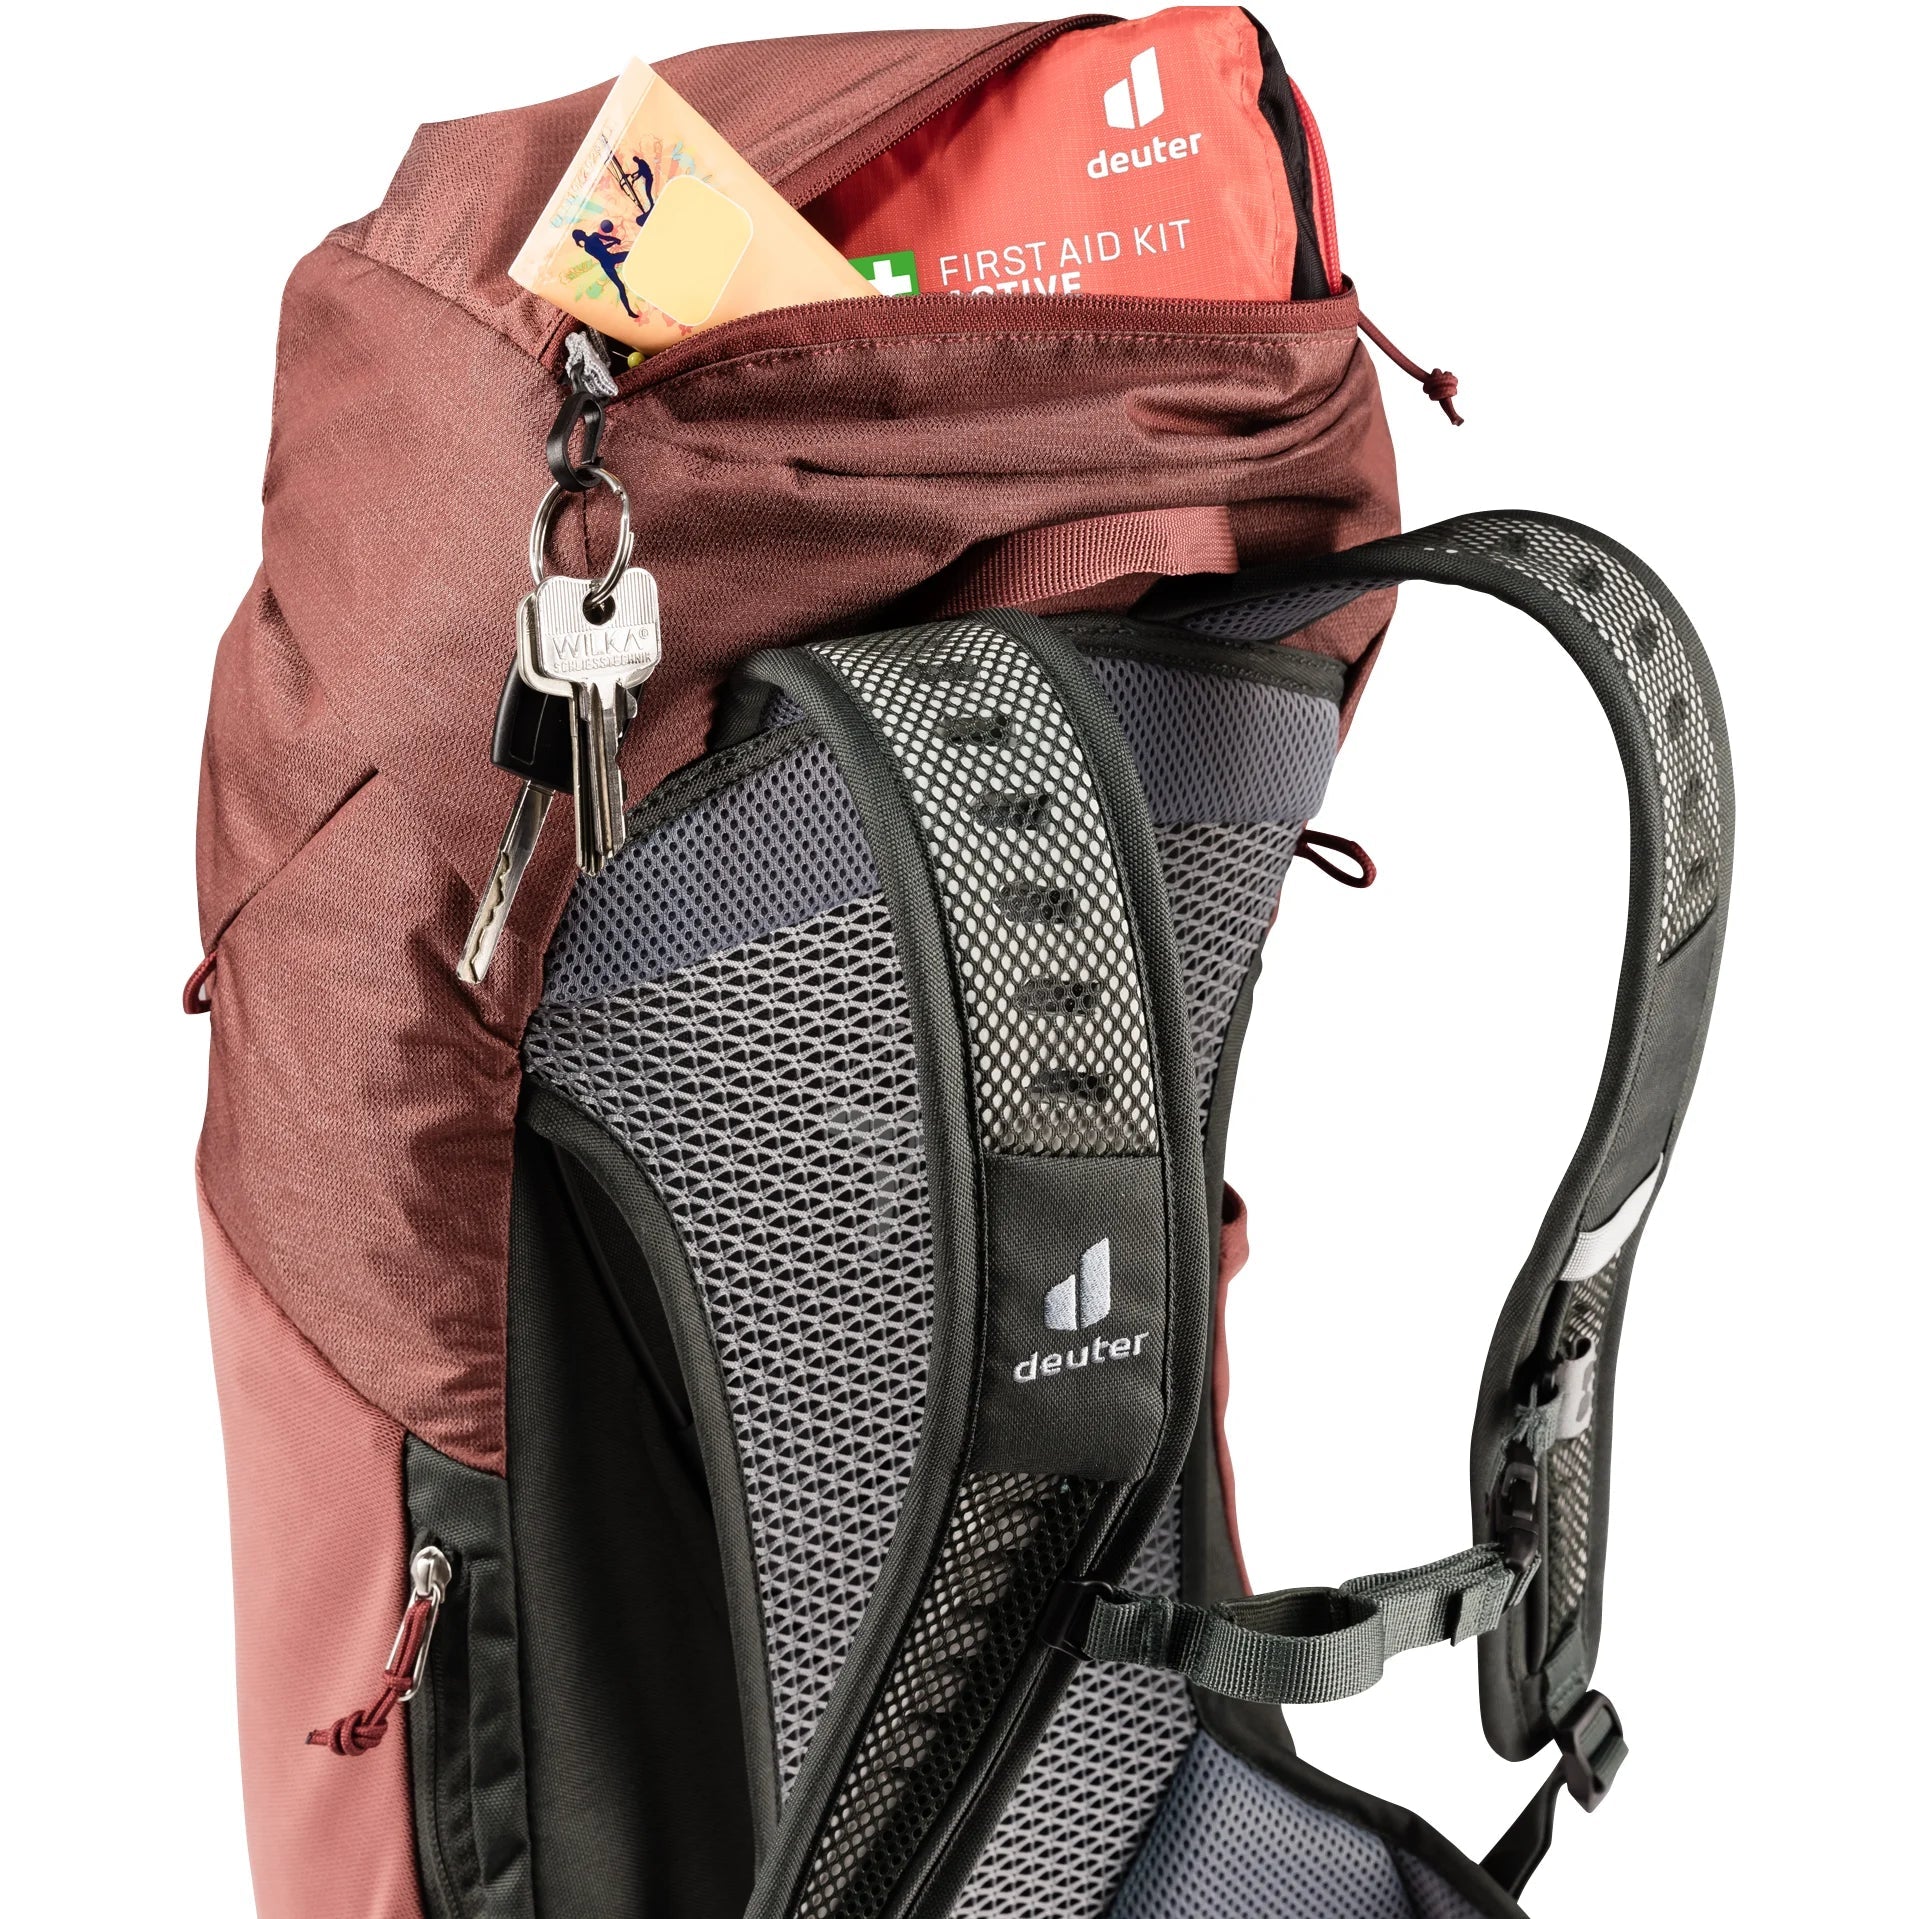 Deuter Travel AC Lite 24 hiking backpack 56 cm - Alpinegreen-Arctic